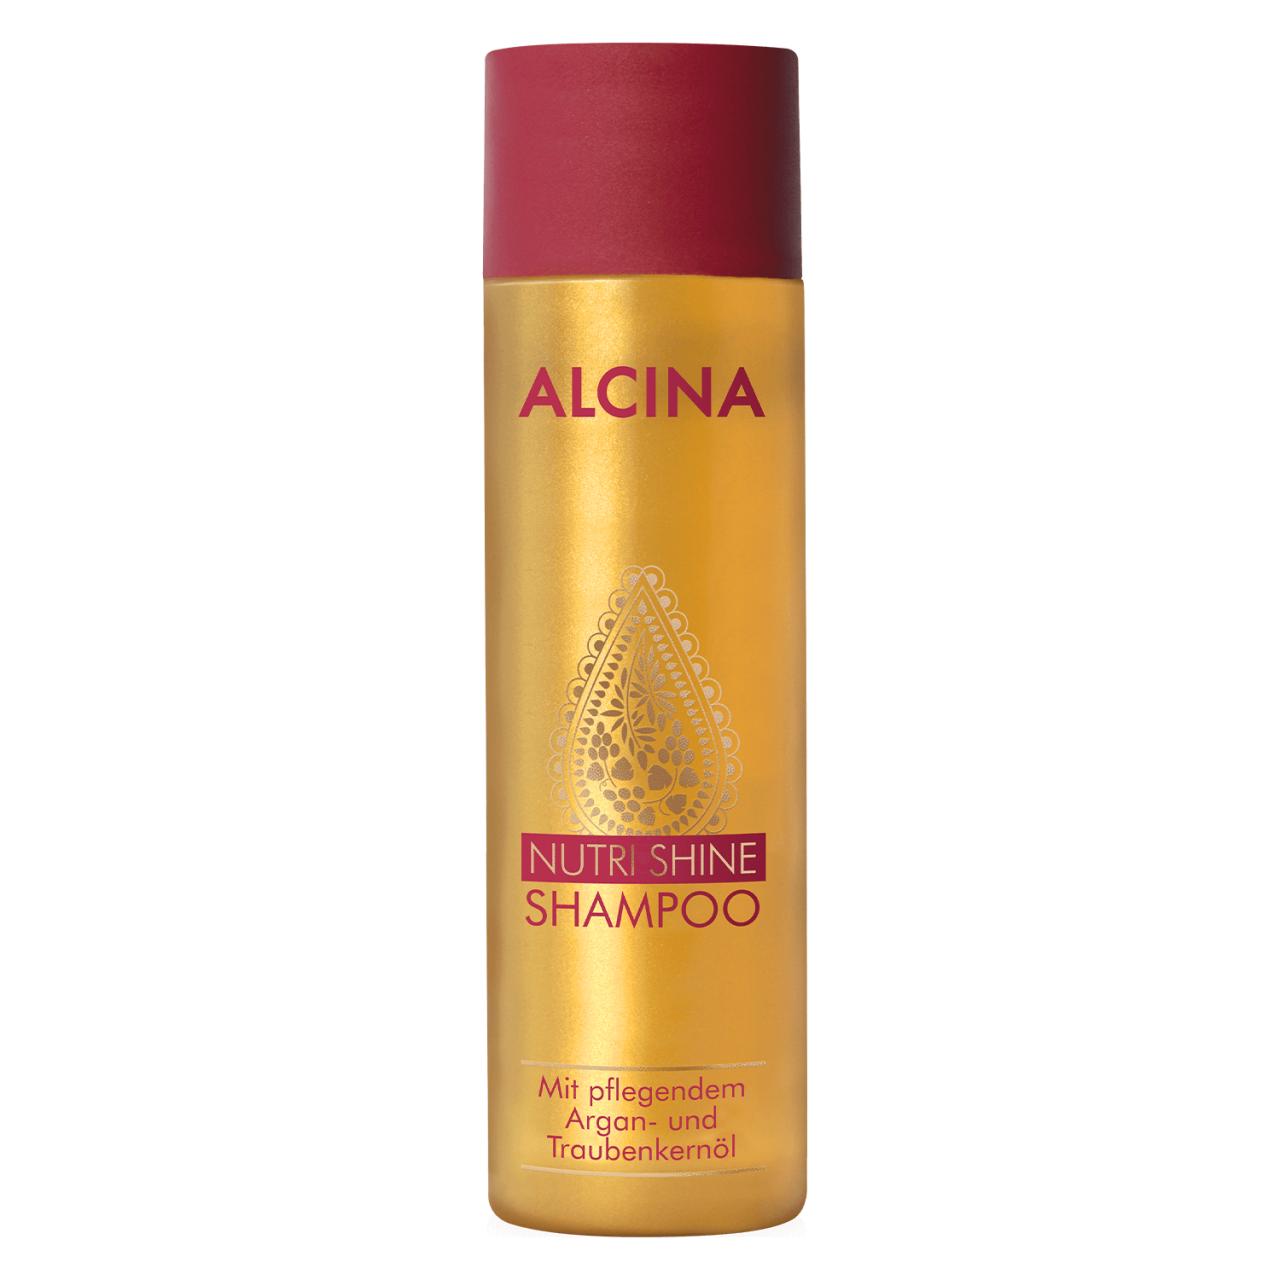 Alcina Nutri Shine - Shampoo von Alcina